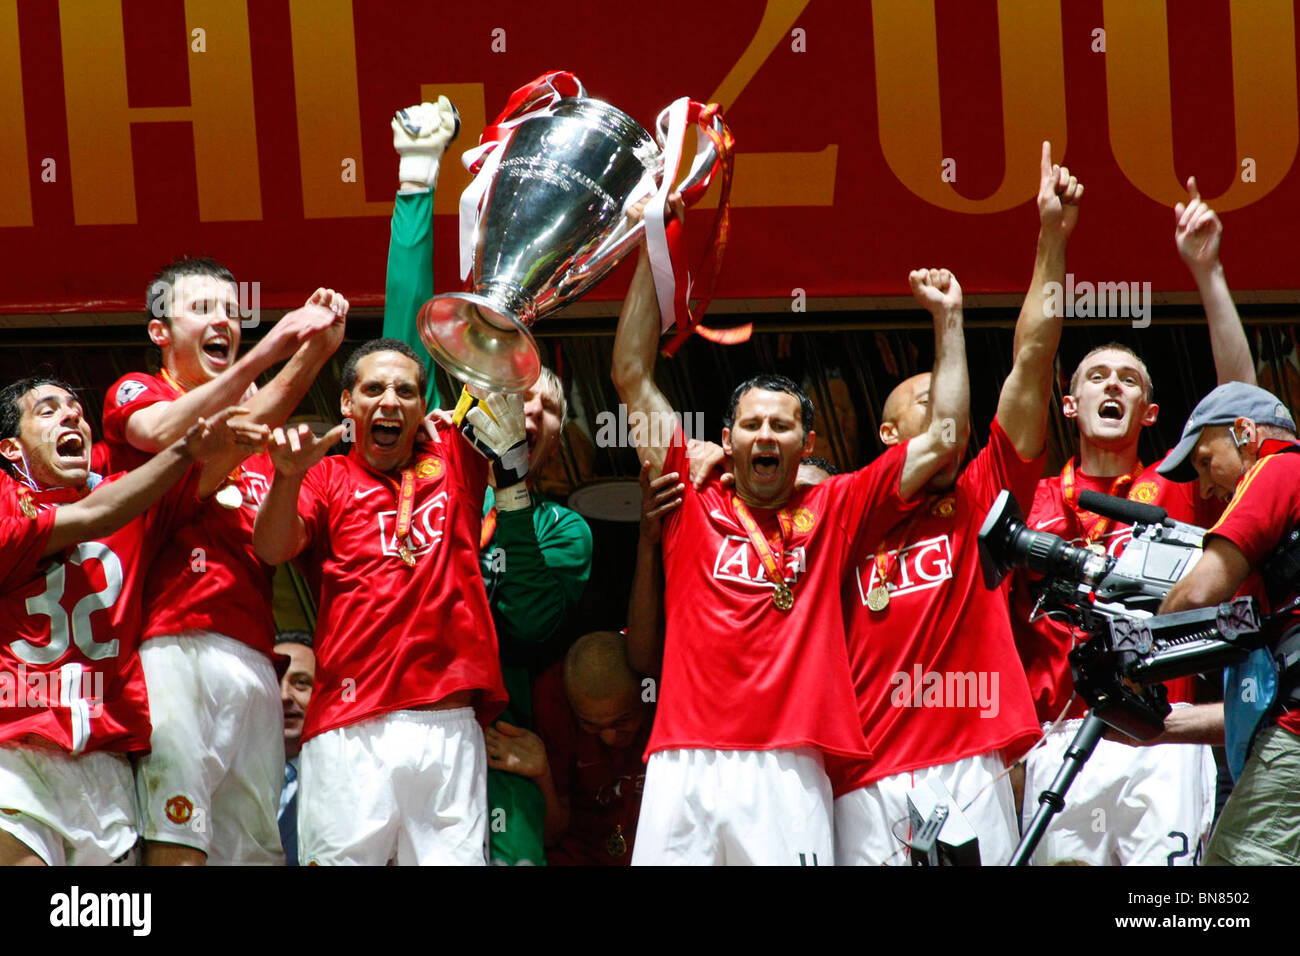 2008 uefa champions league final